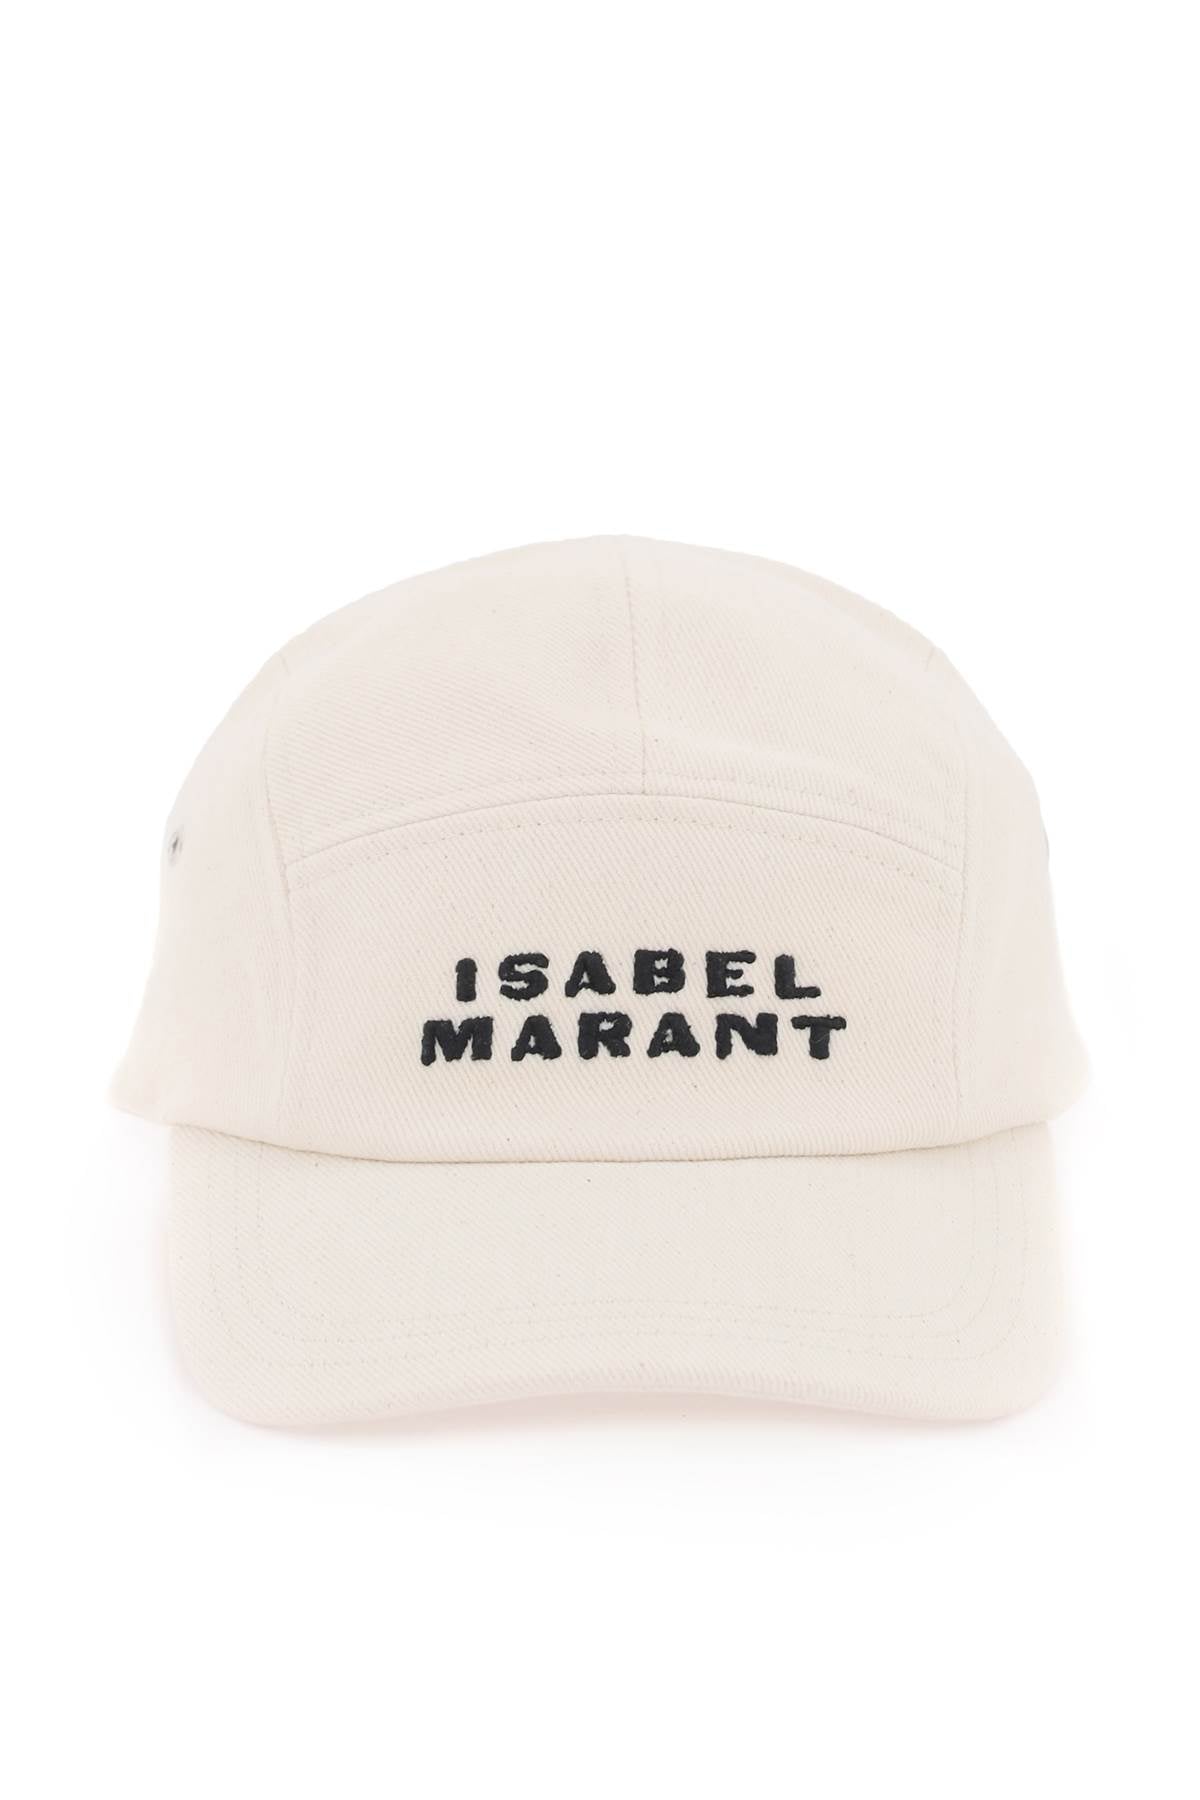 Isabel marant tedji baseball cap-women > accessories > scarves and gloves-Isabel Marant-Urbanheer